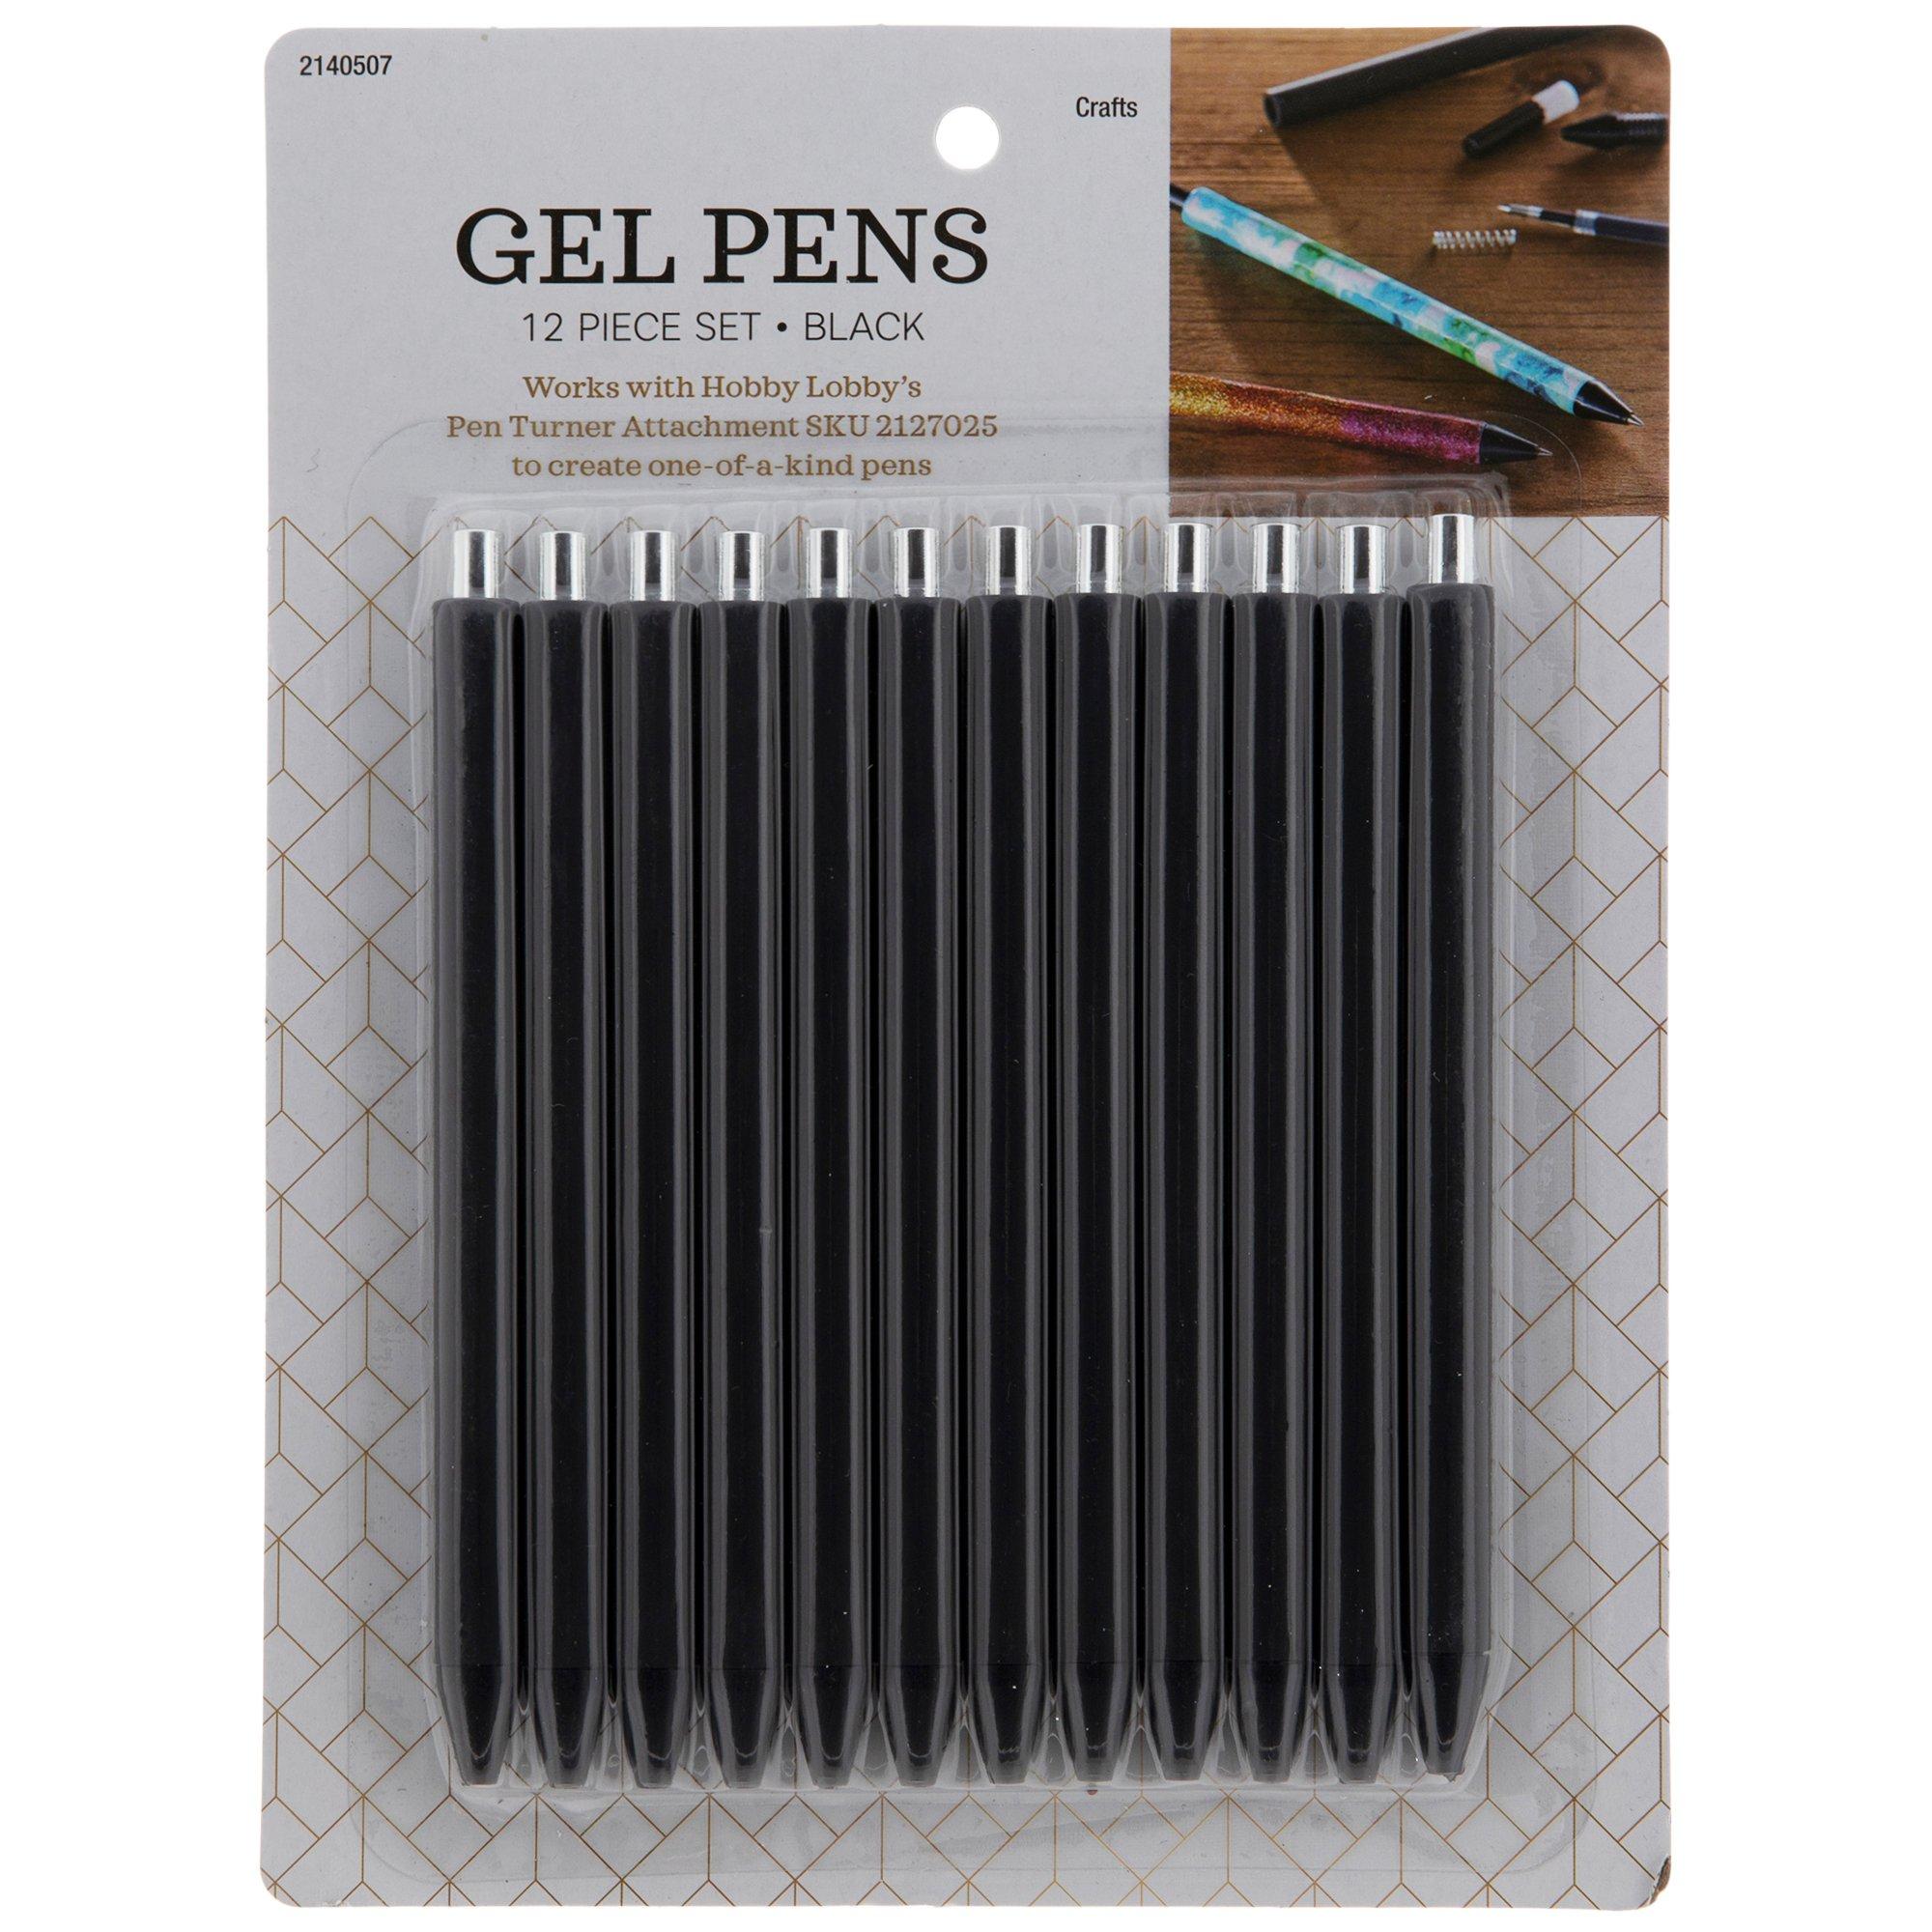 12 Pcs Retractable Gel Pens Set With Black Ink - Best Pens For